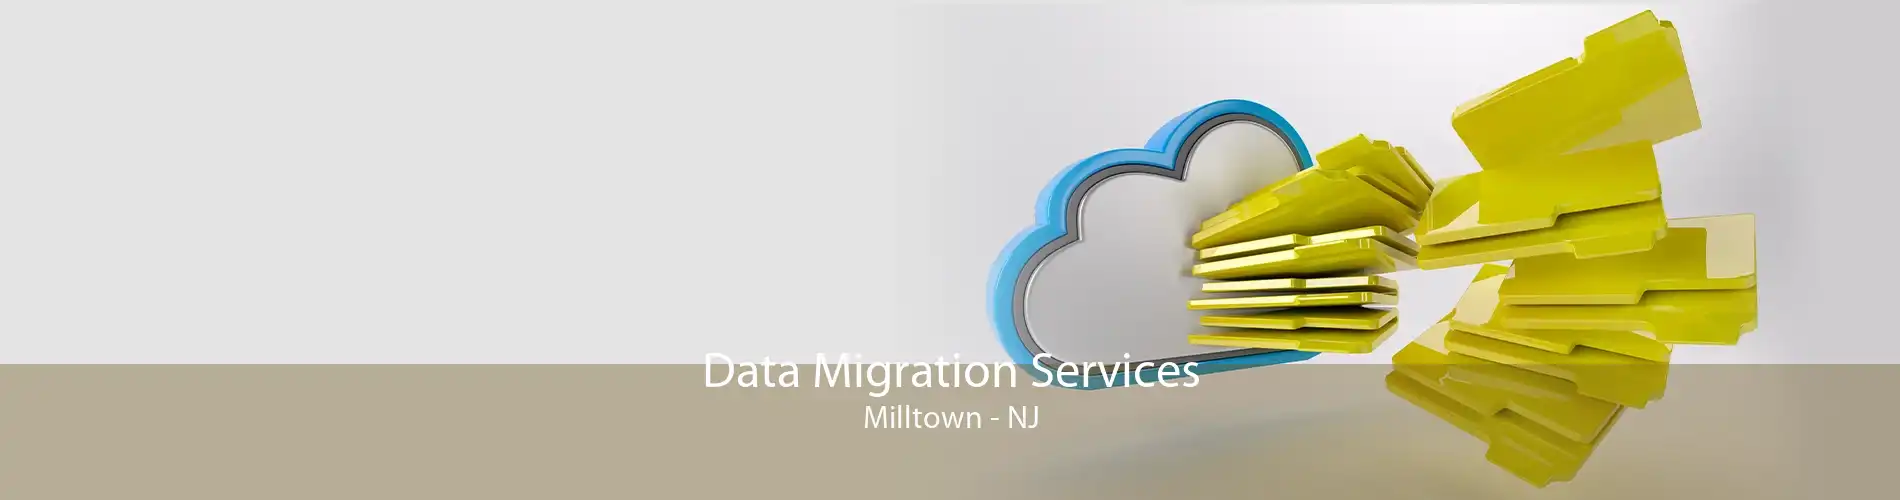 Data Migration Services Milltown - NJ